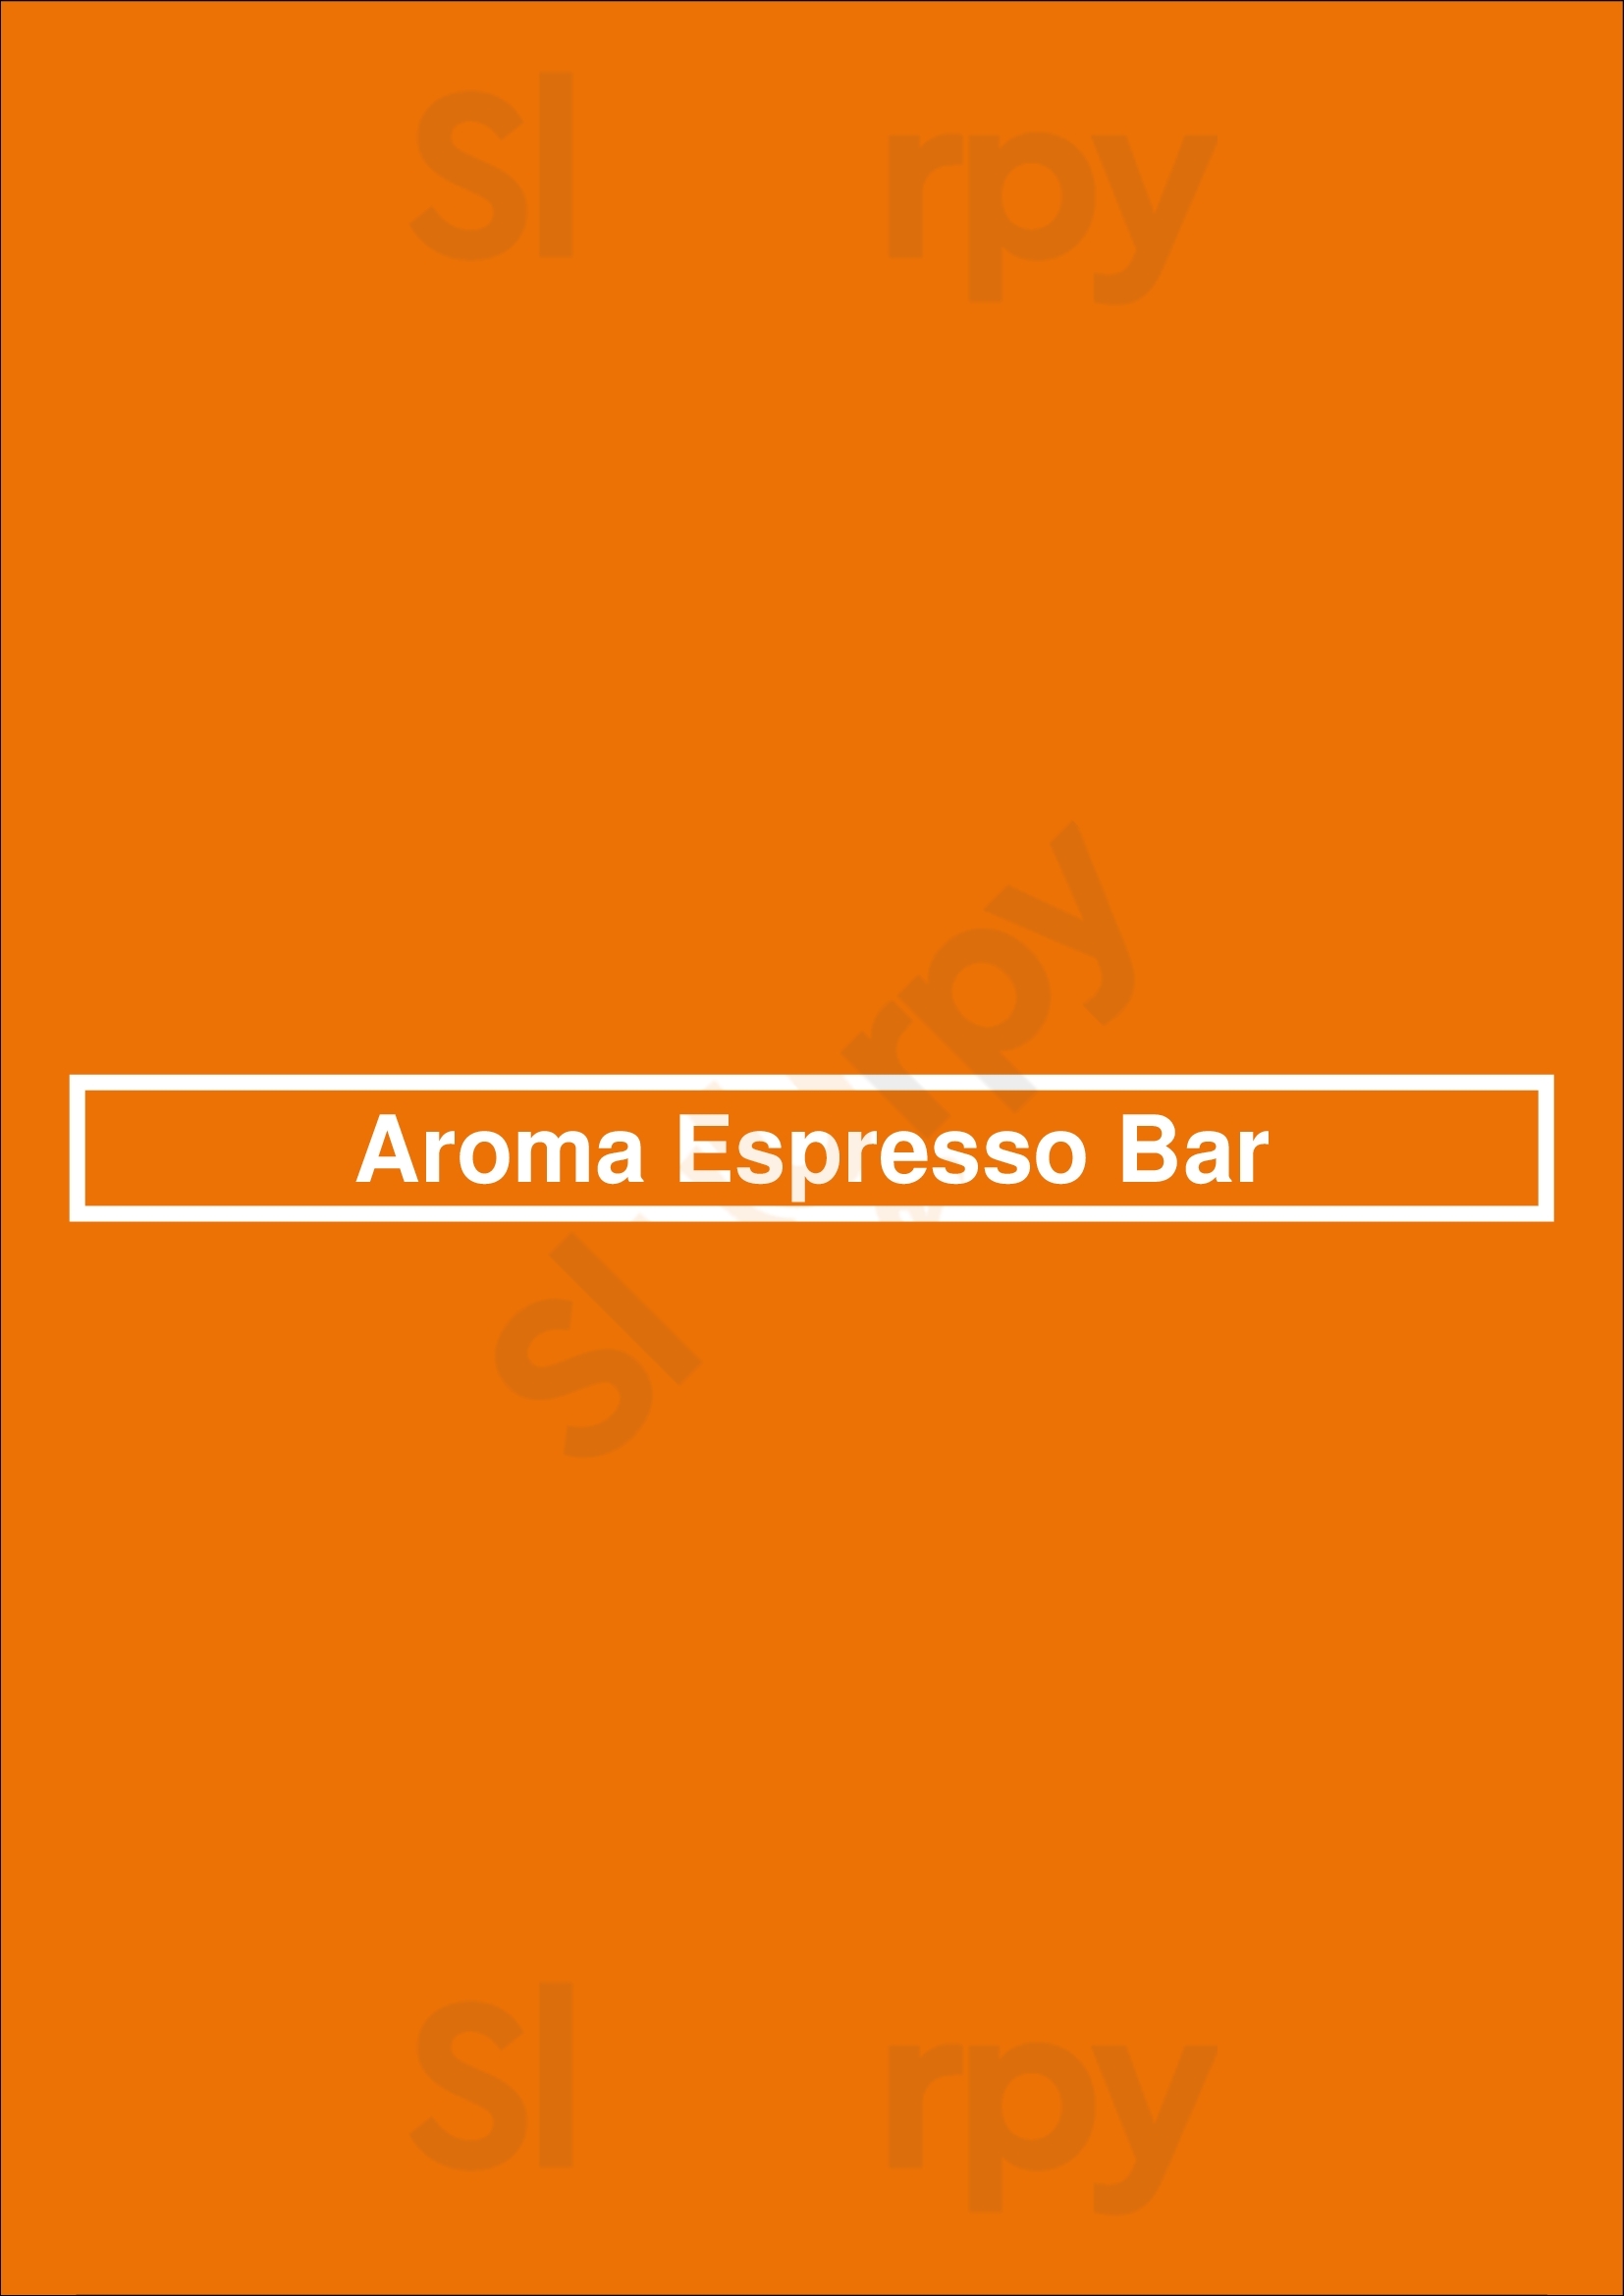 Aroma Espresso Bar Mississauga Menu - 1